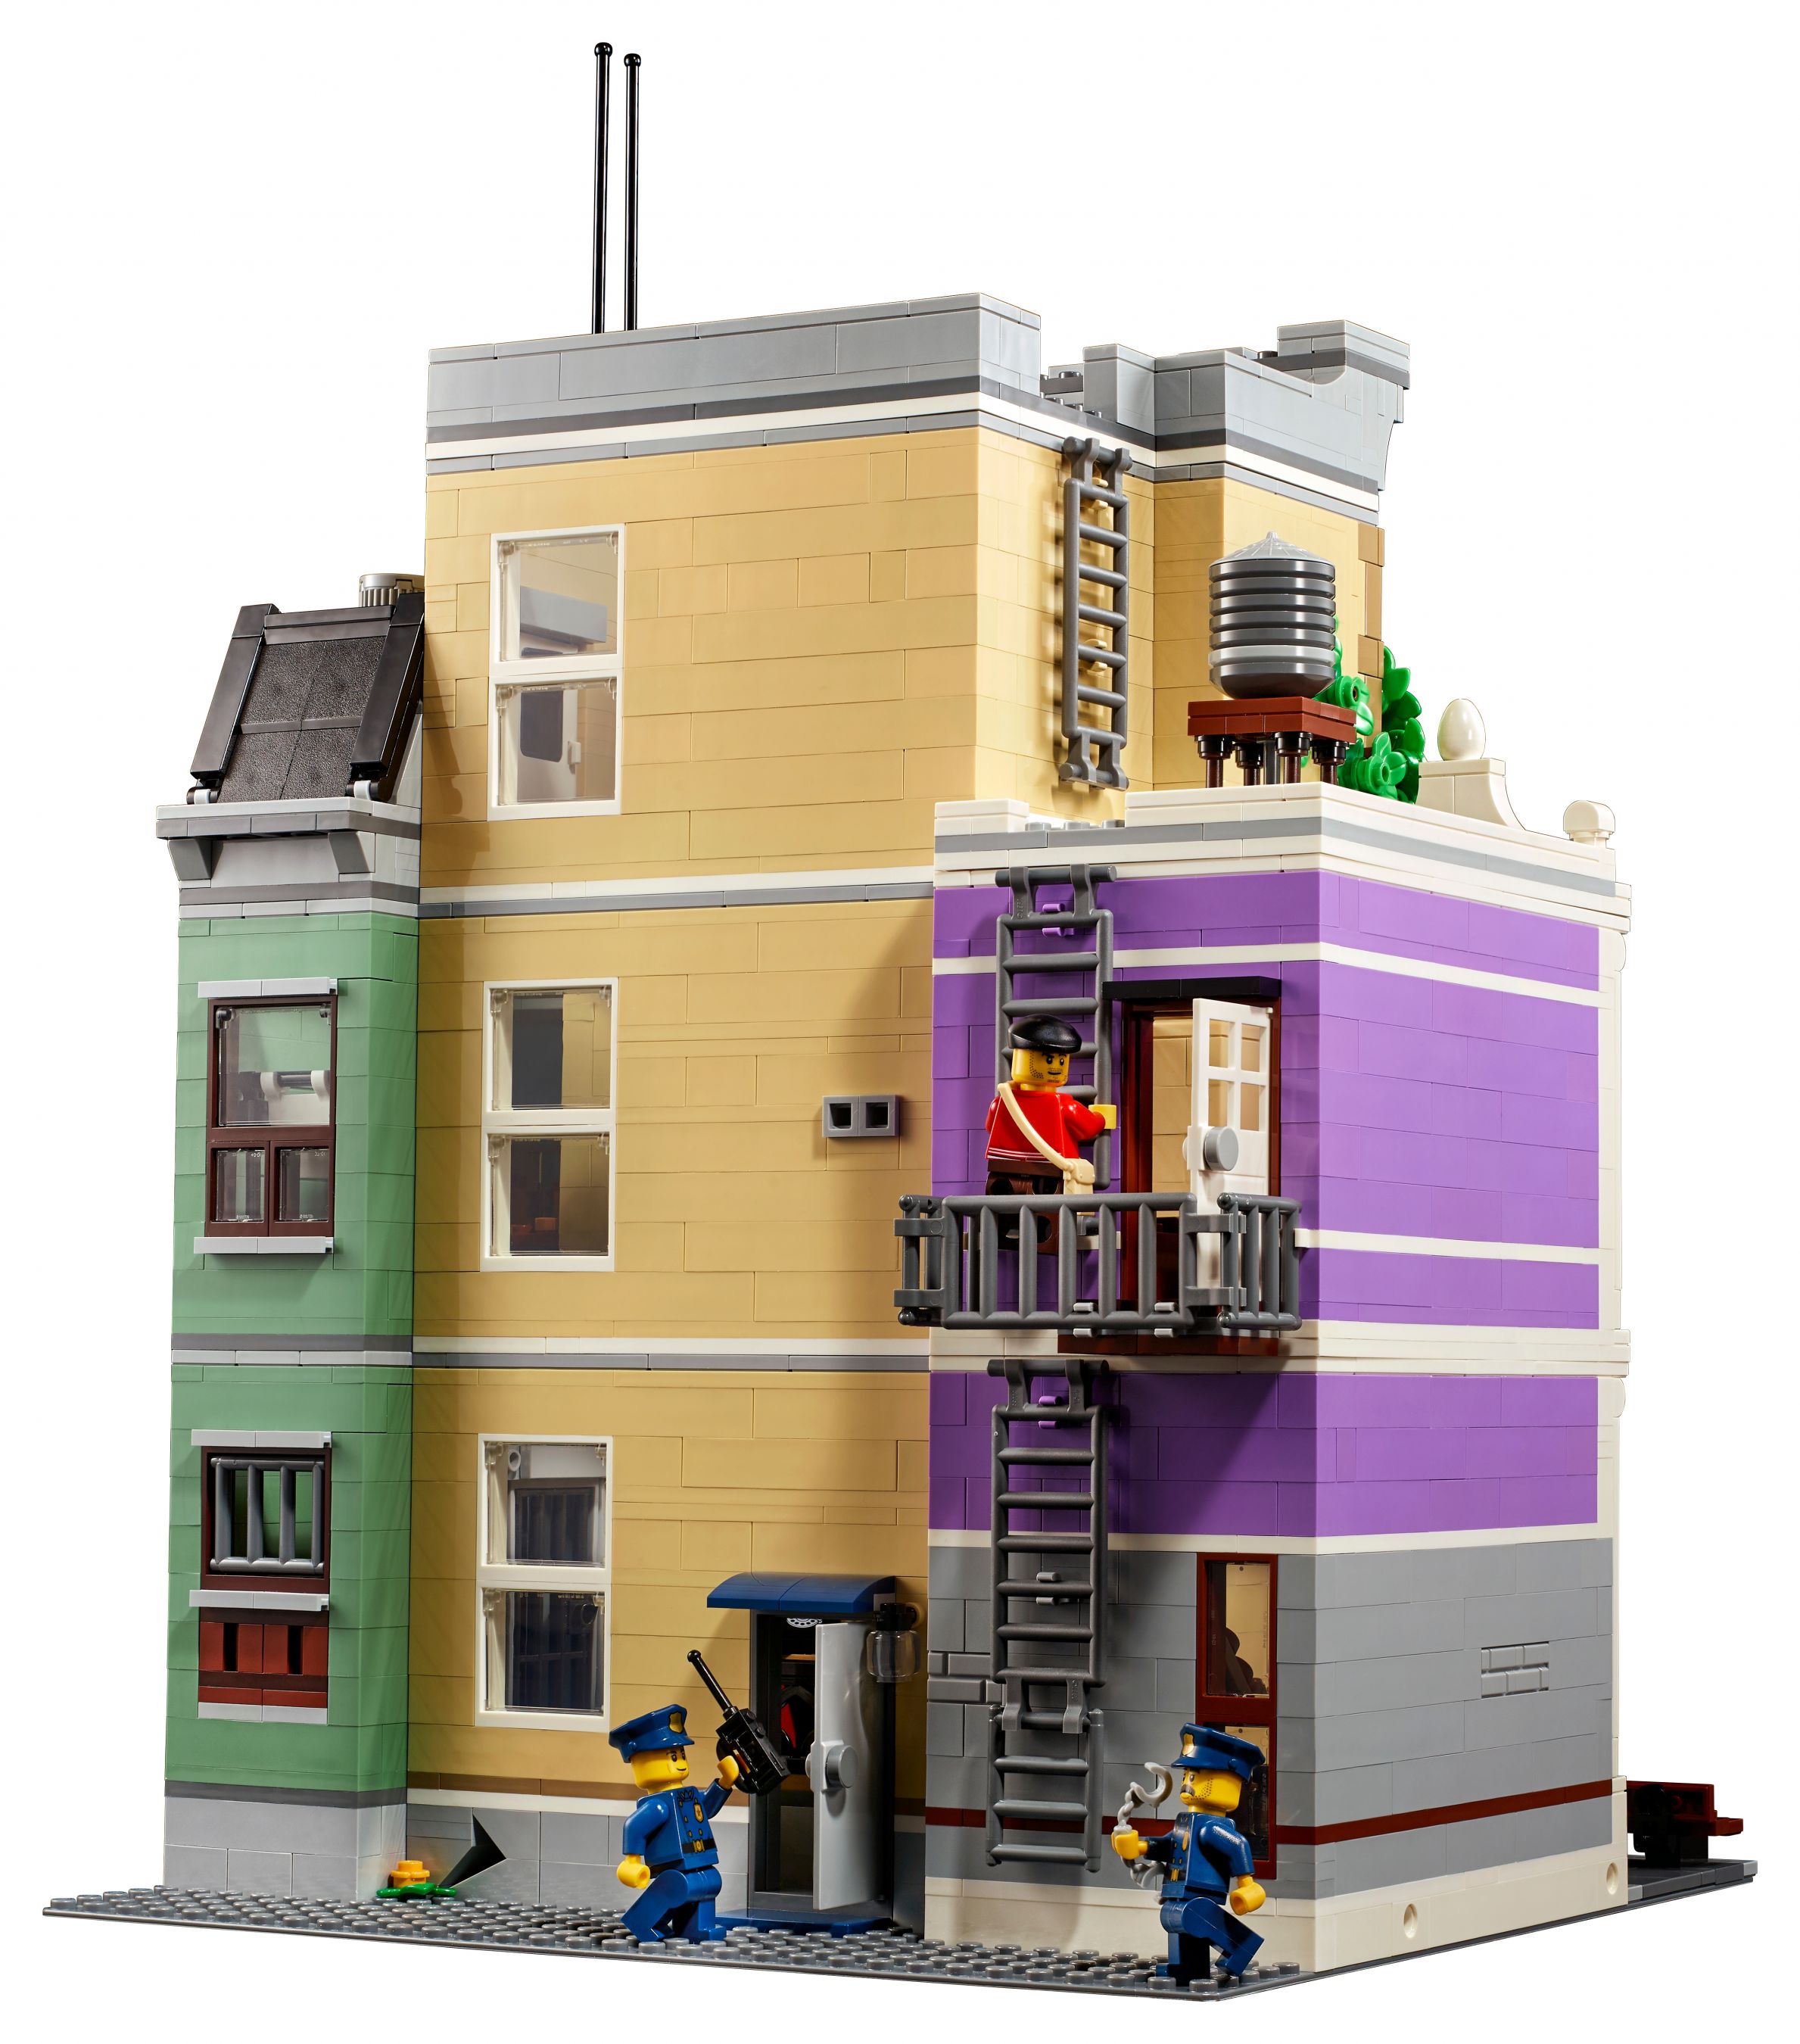 LEGO Advanced Models 10278 Polizeistation LEGO_10278_alt4.jpg